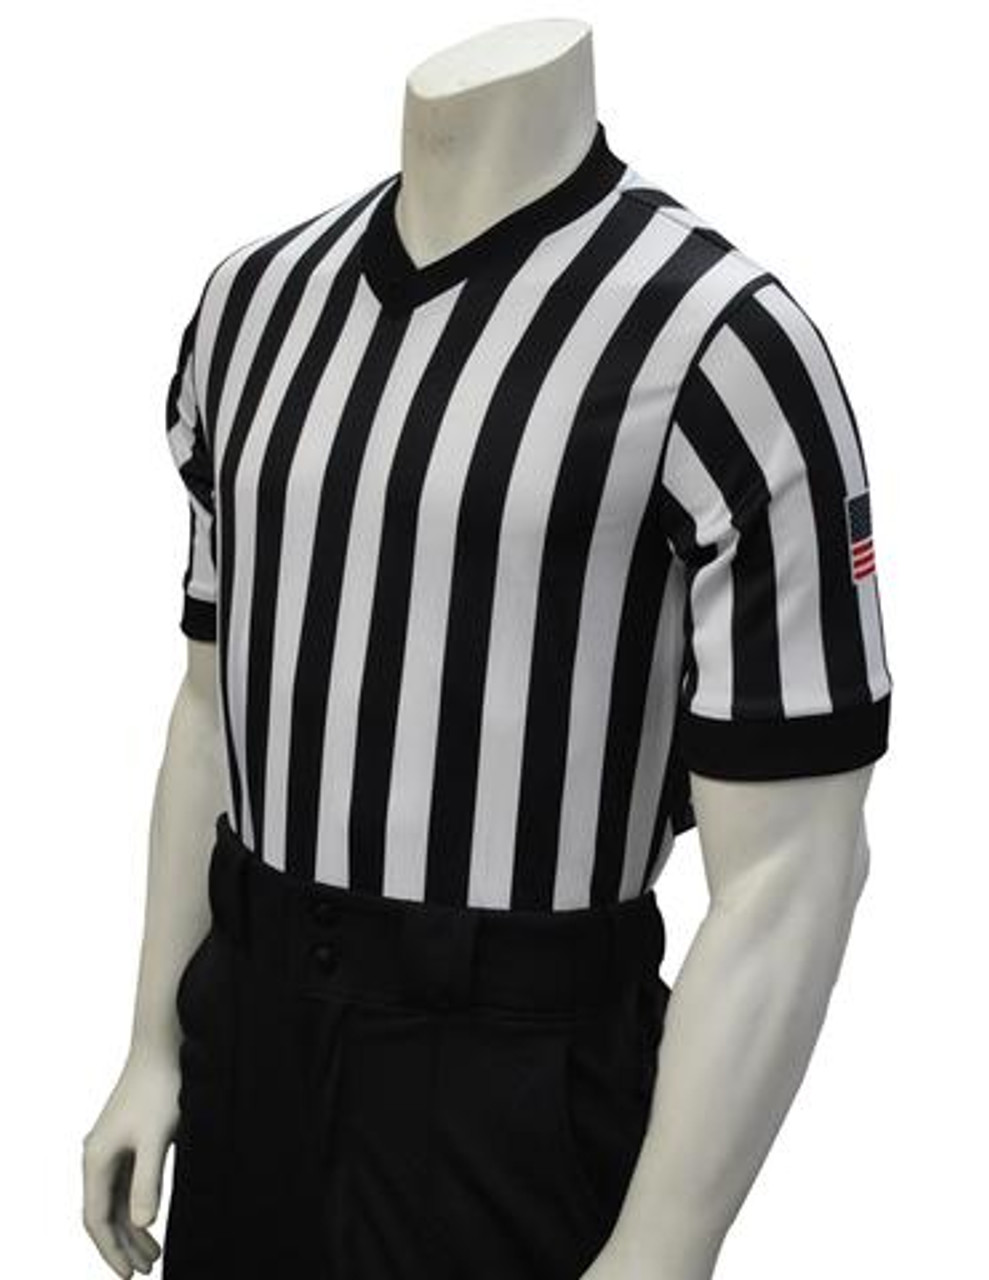 Smitty Dye Sublimated Basketball Referee Shirt | Referee Equipment